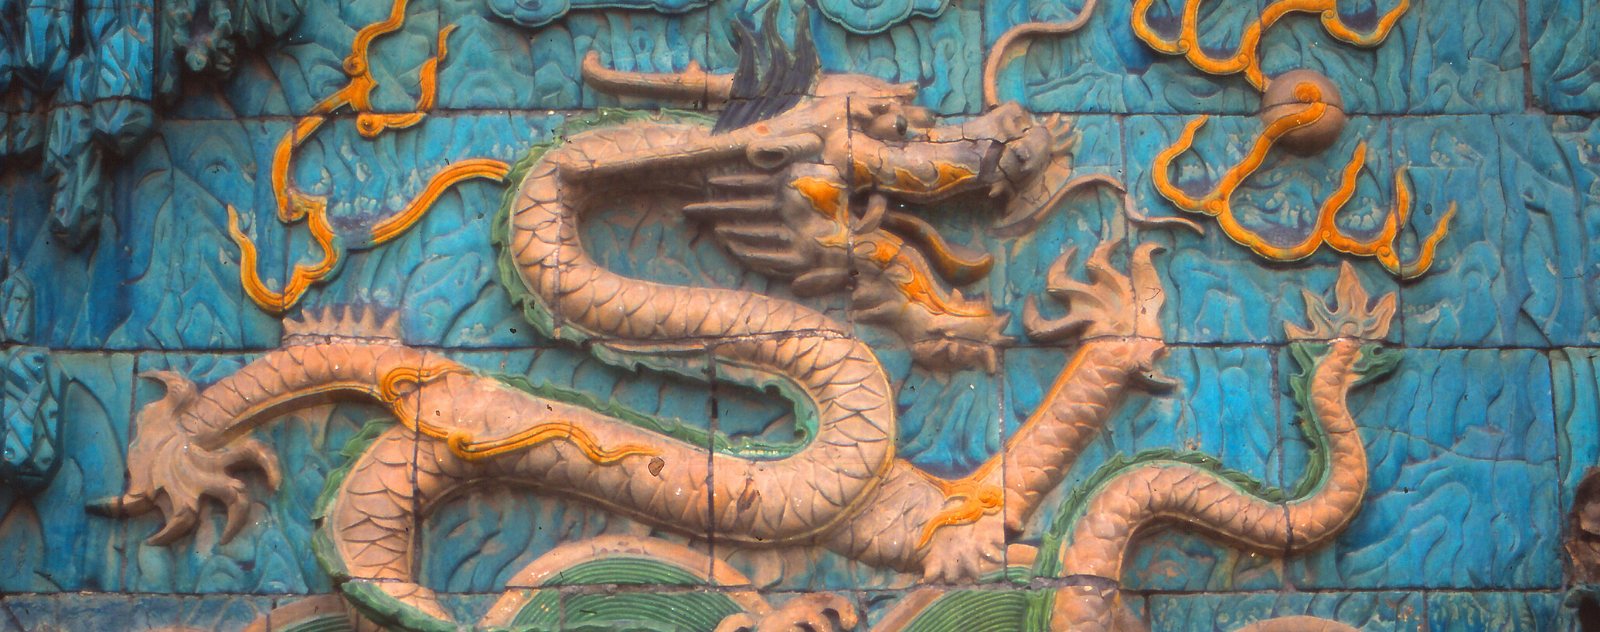 dragon oriental